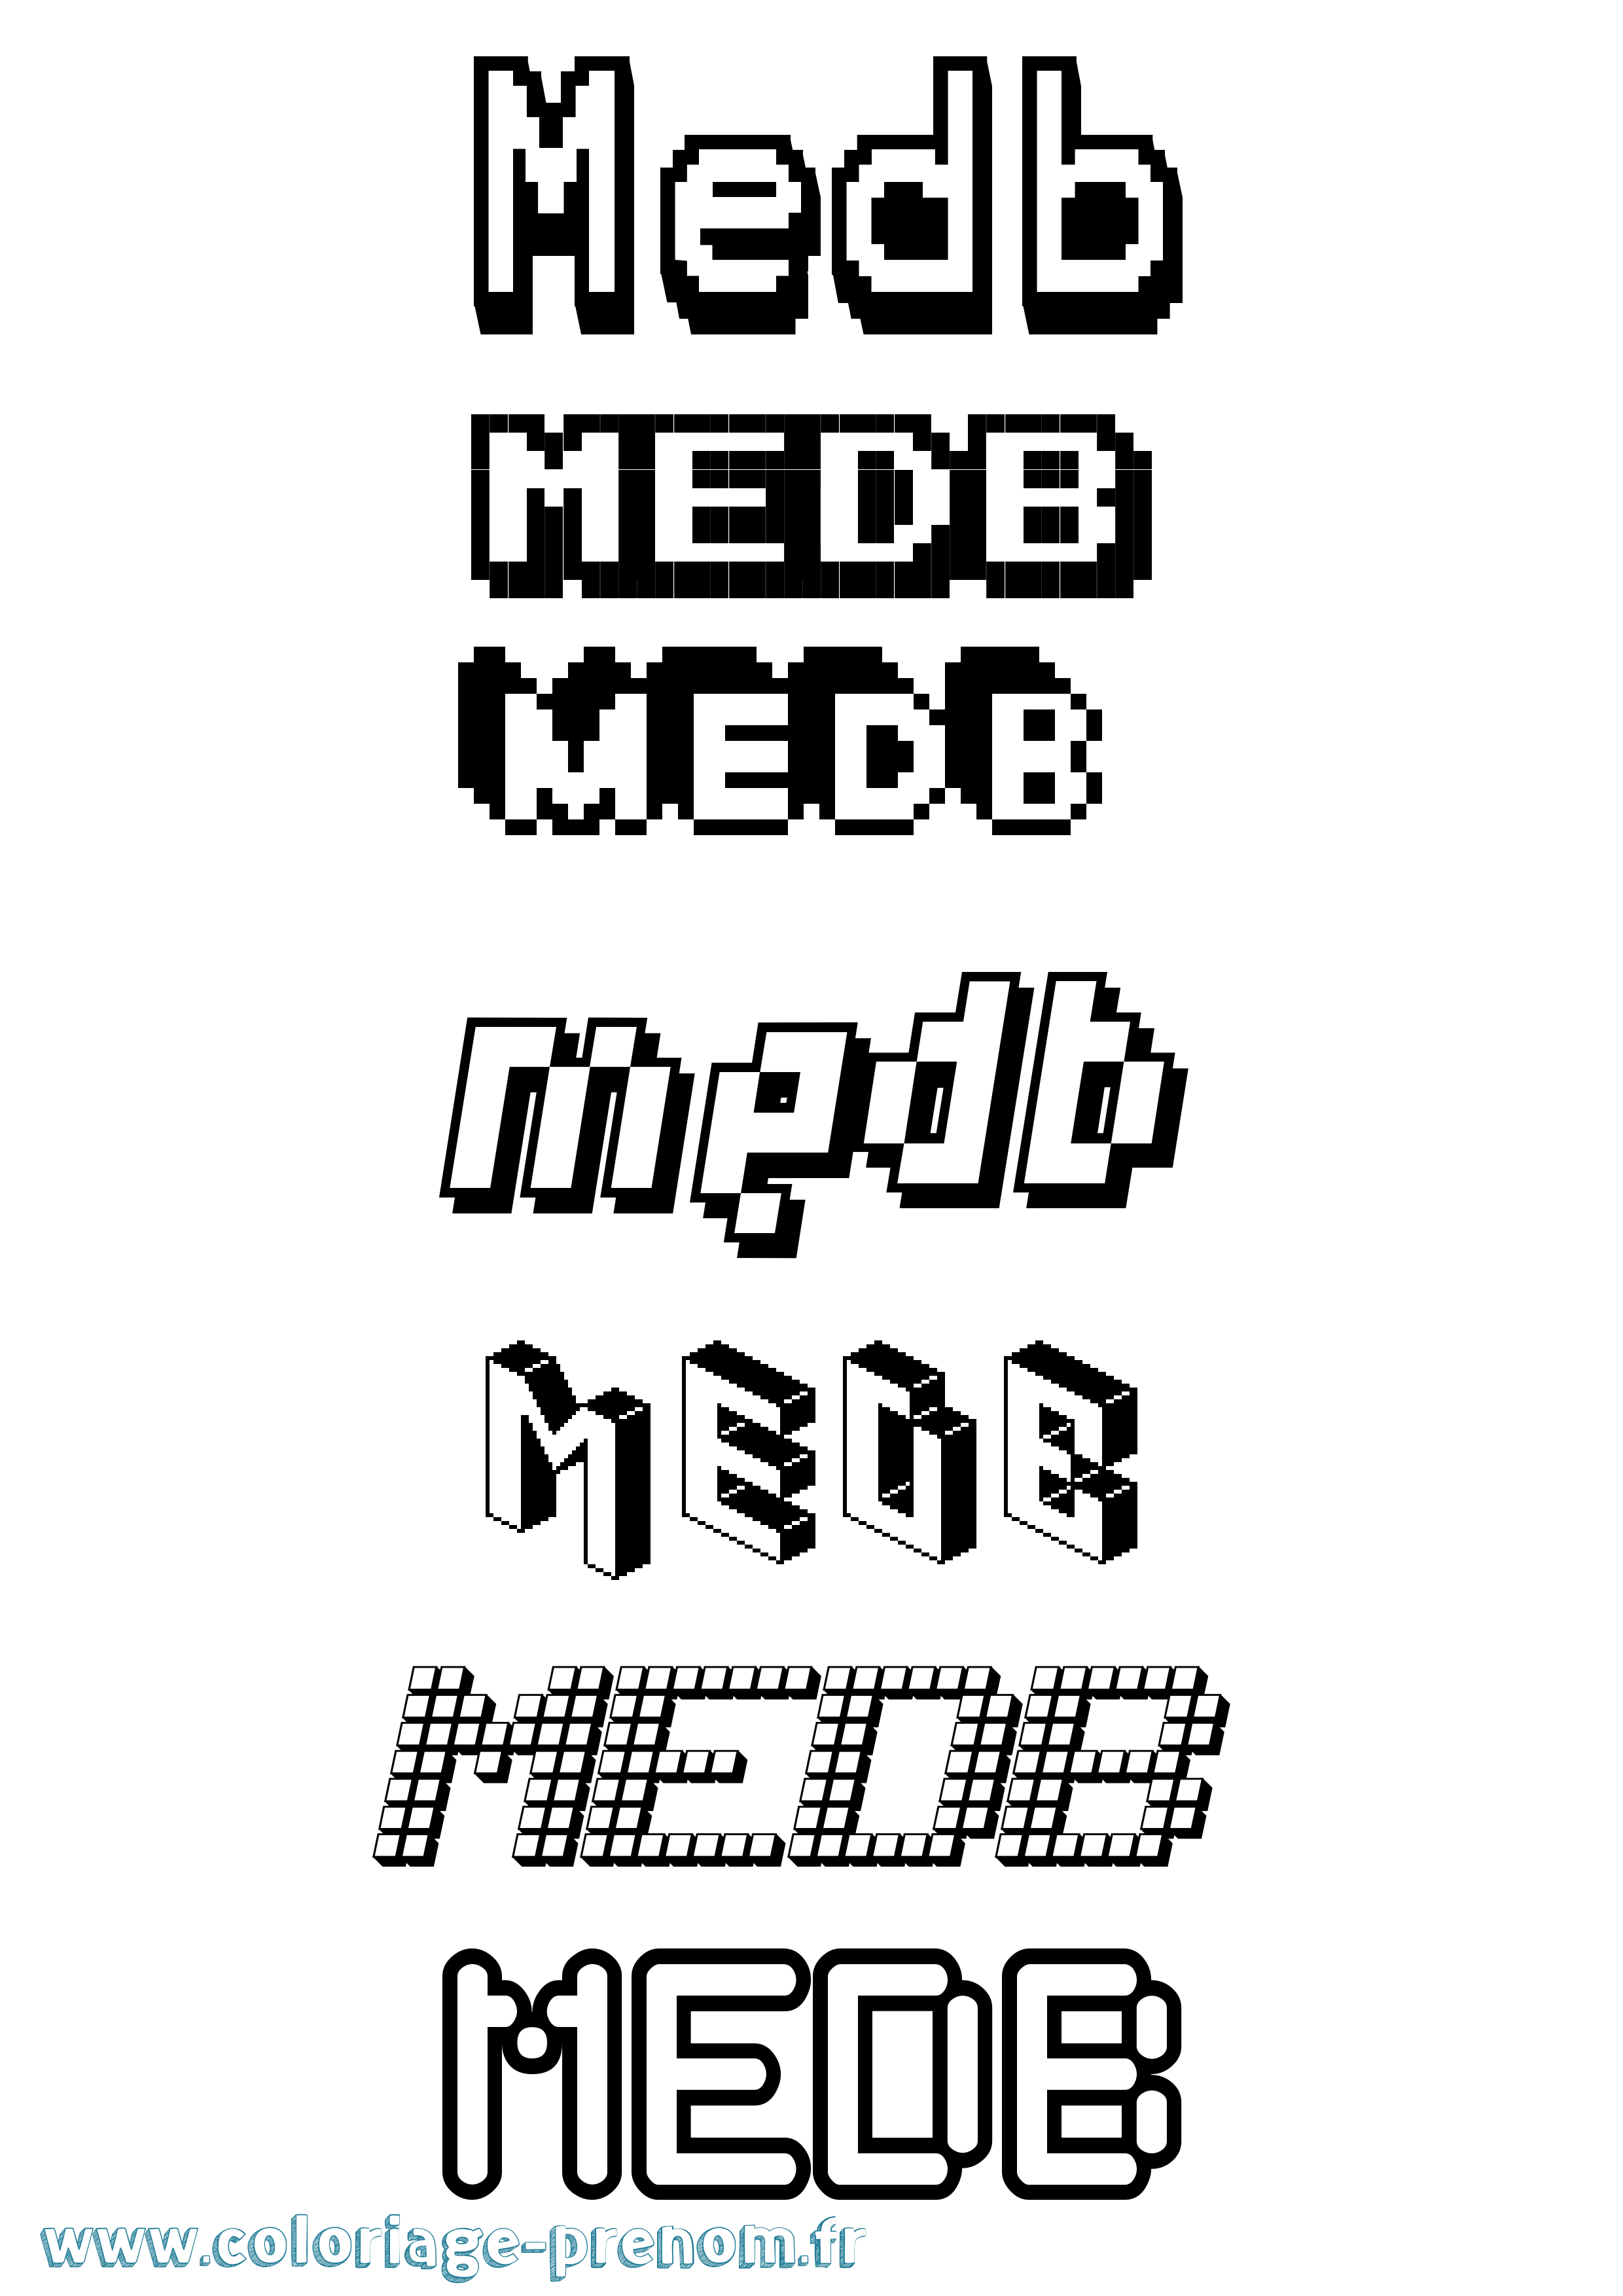 Coloriage prénom Medb Pixel